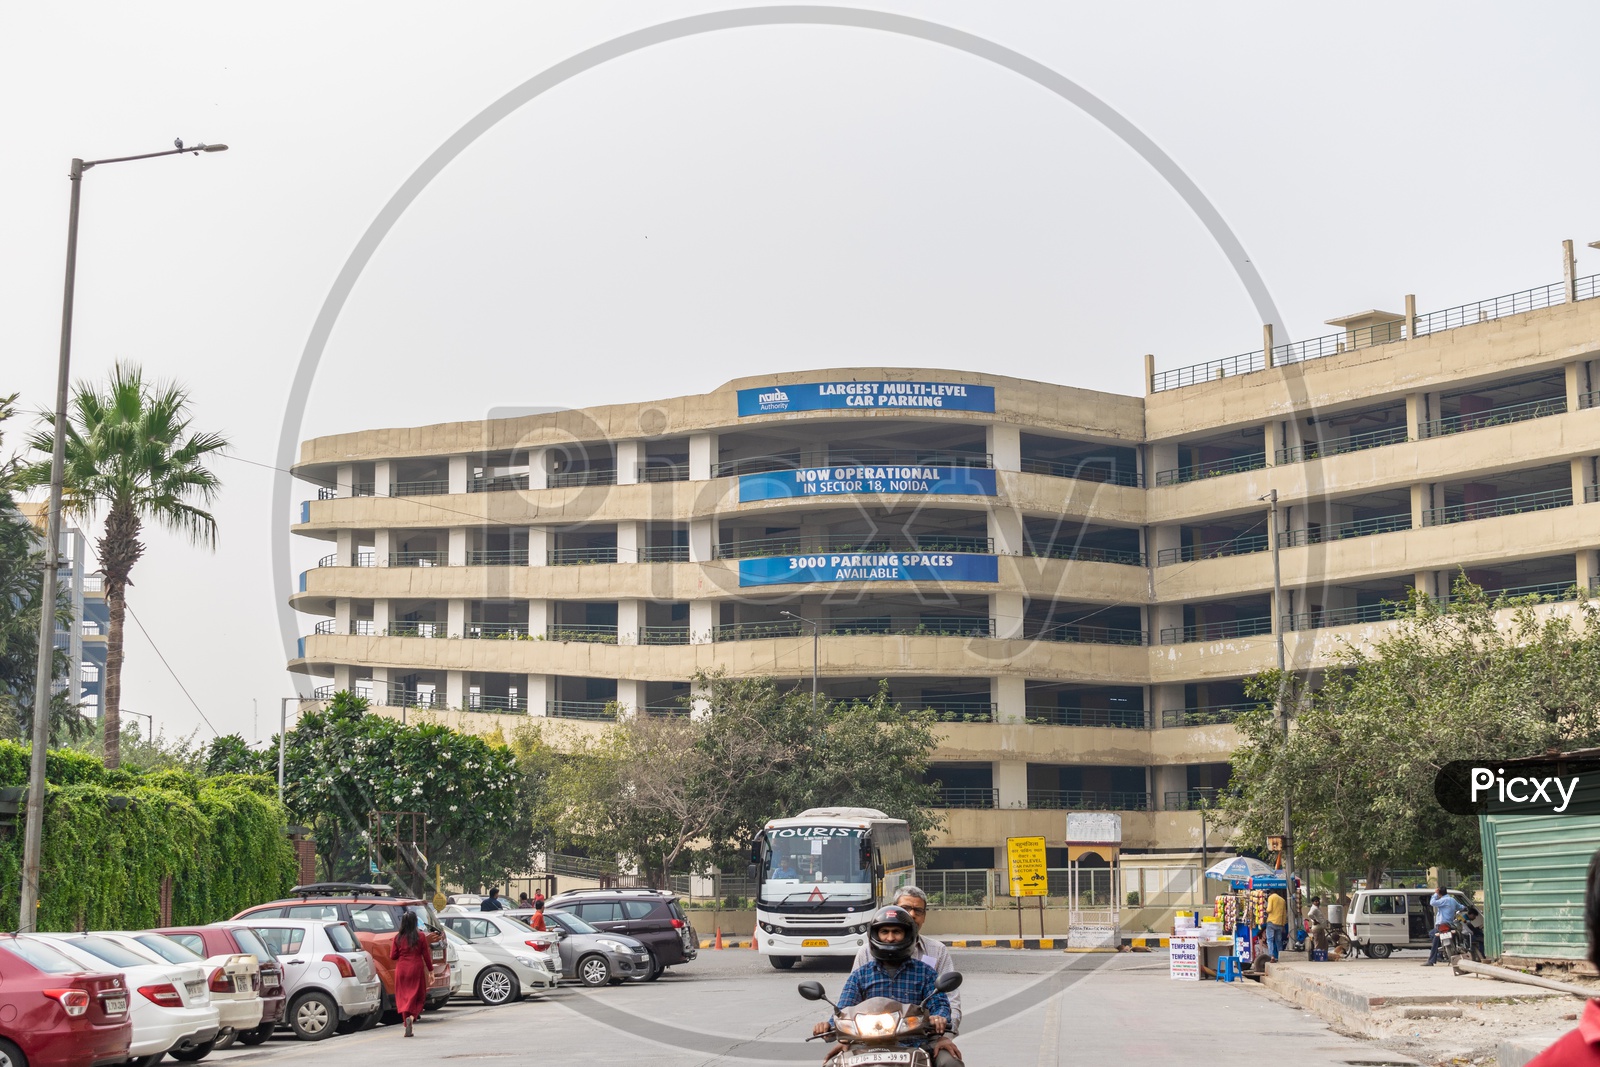 Largest multi level car parking in Noida